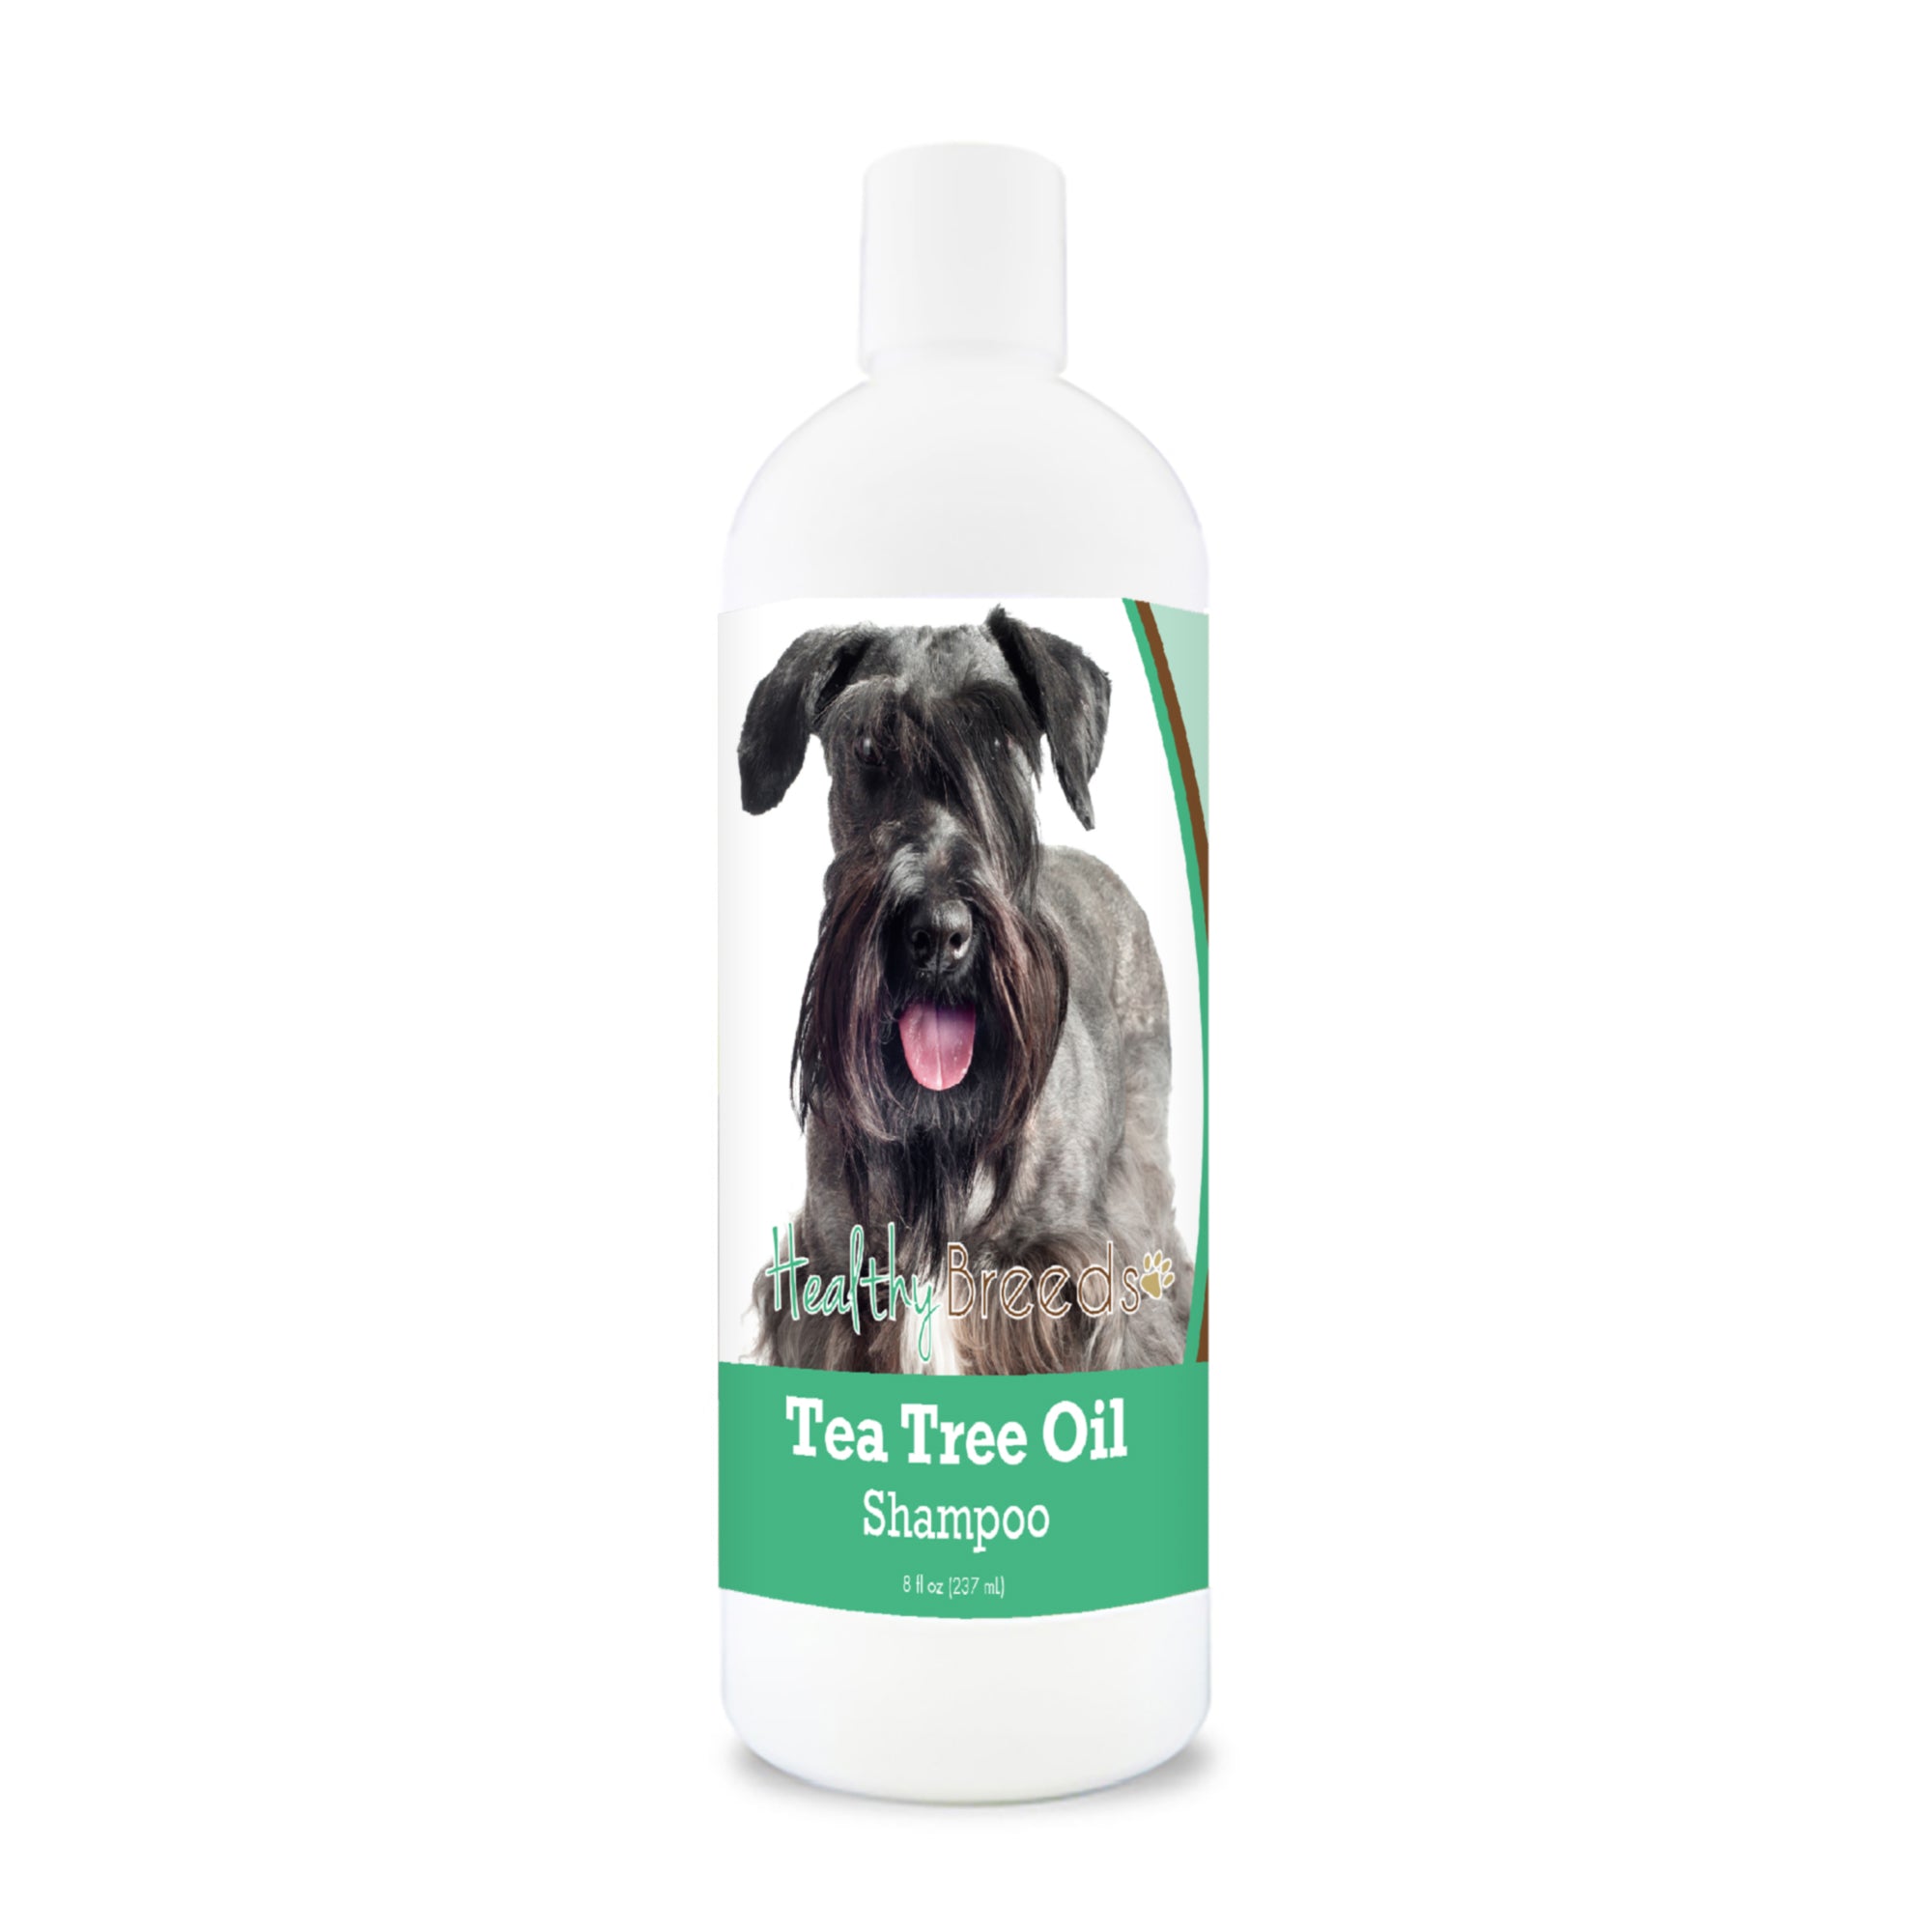 Cesky Terrier Tea Tree Oil Shampoo 8 oz